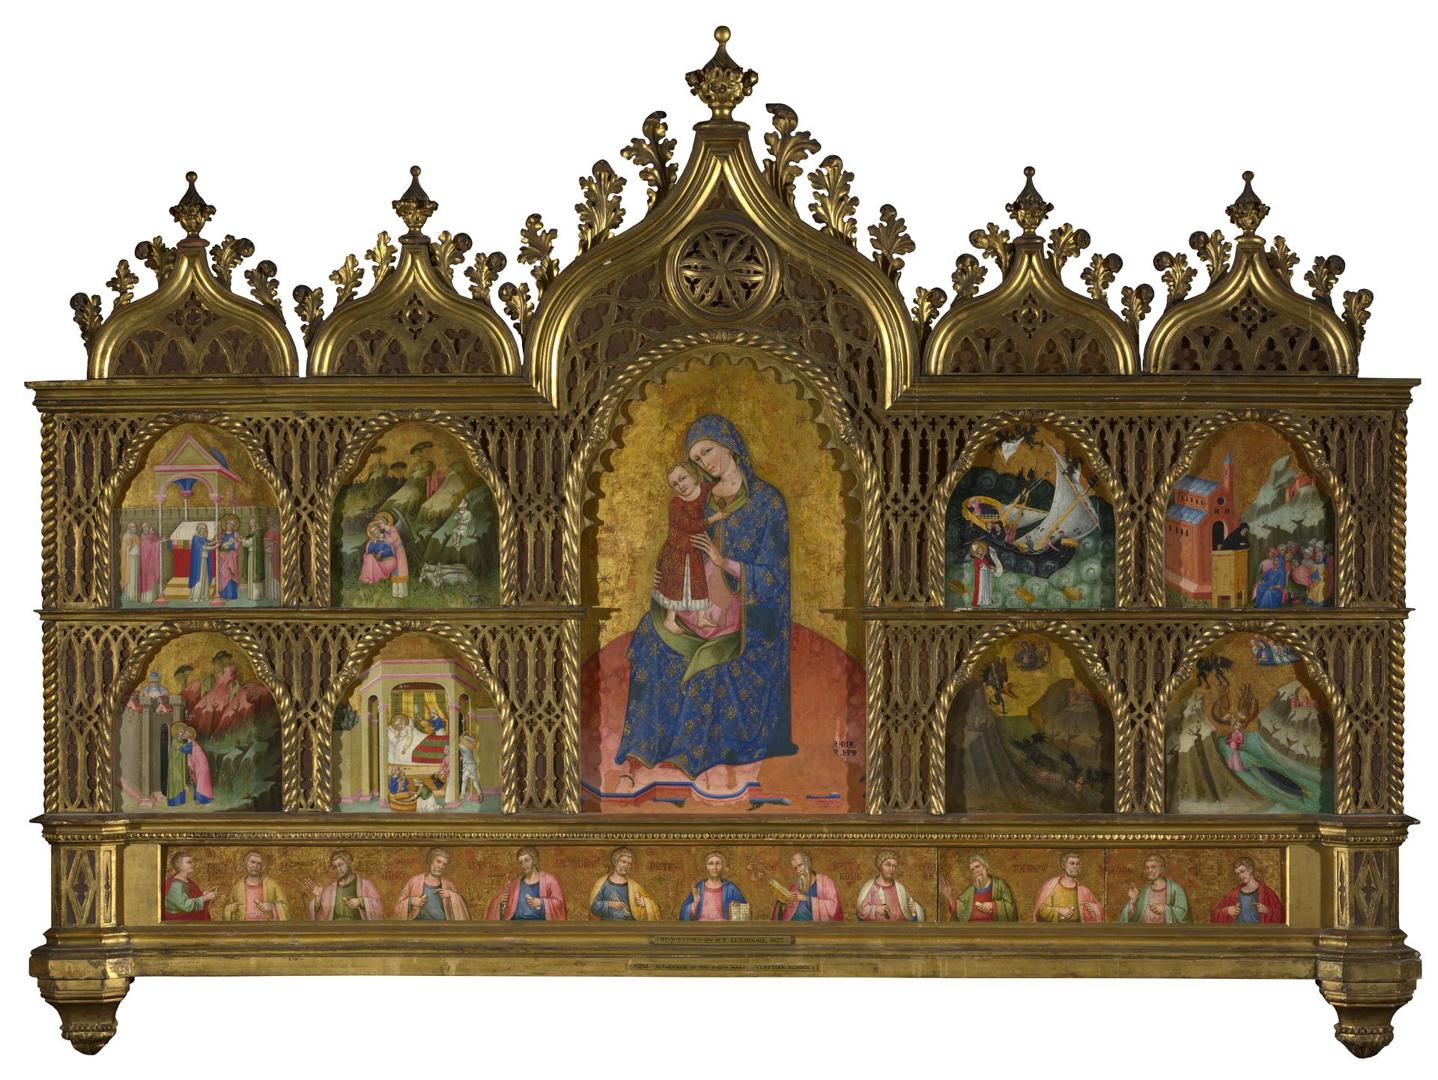 Altarpiece of the Virgin Mary by Dalmatian/Venetian